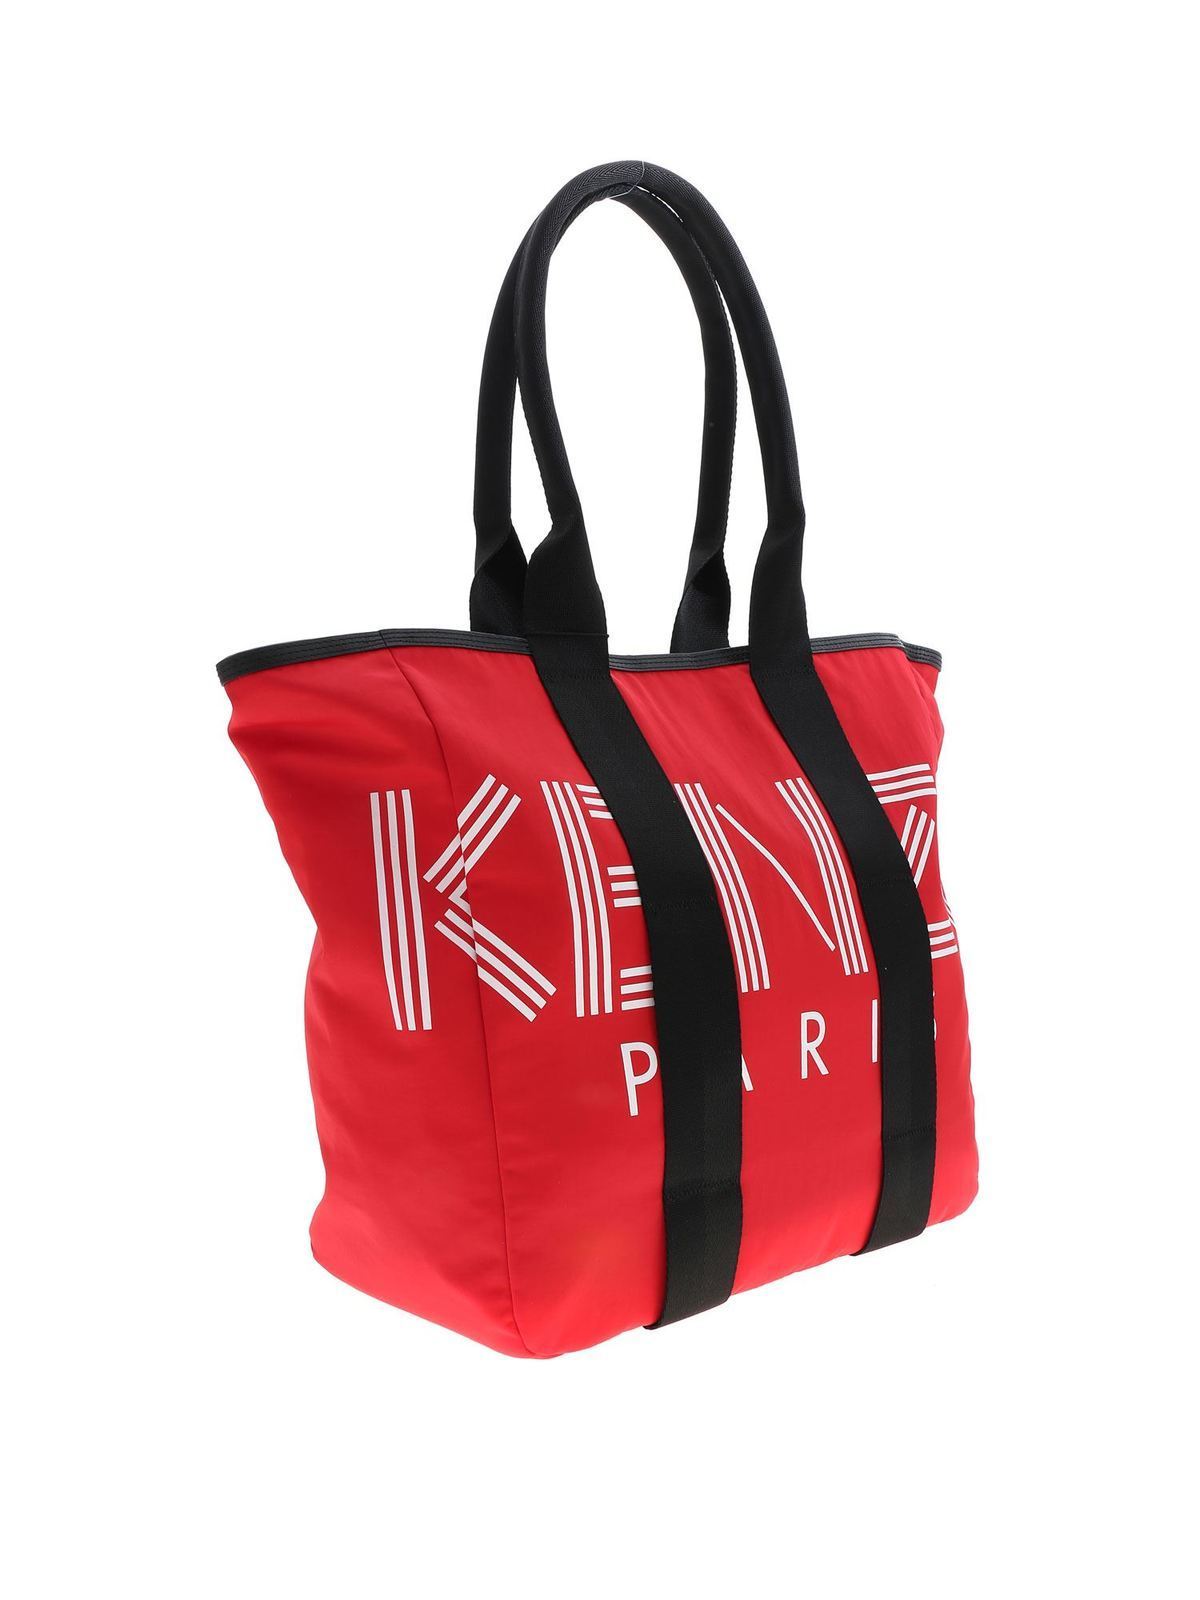 Kenzo - Kenzo Paris tote - totes bags - 5SF219F2421